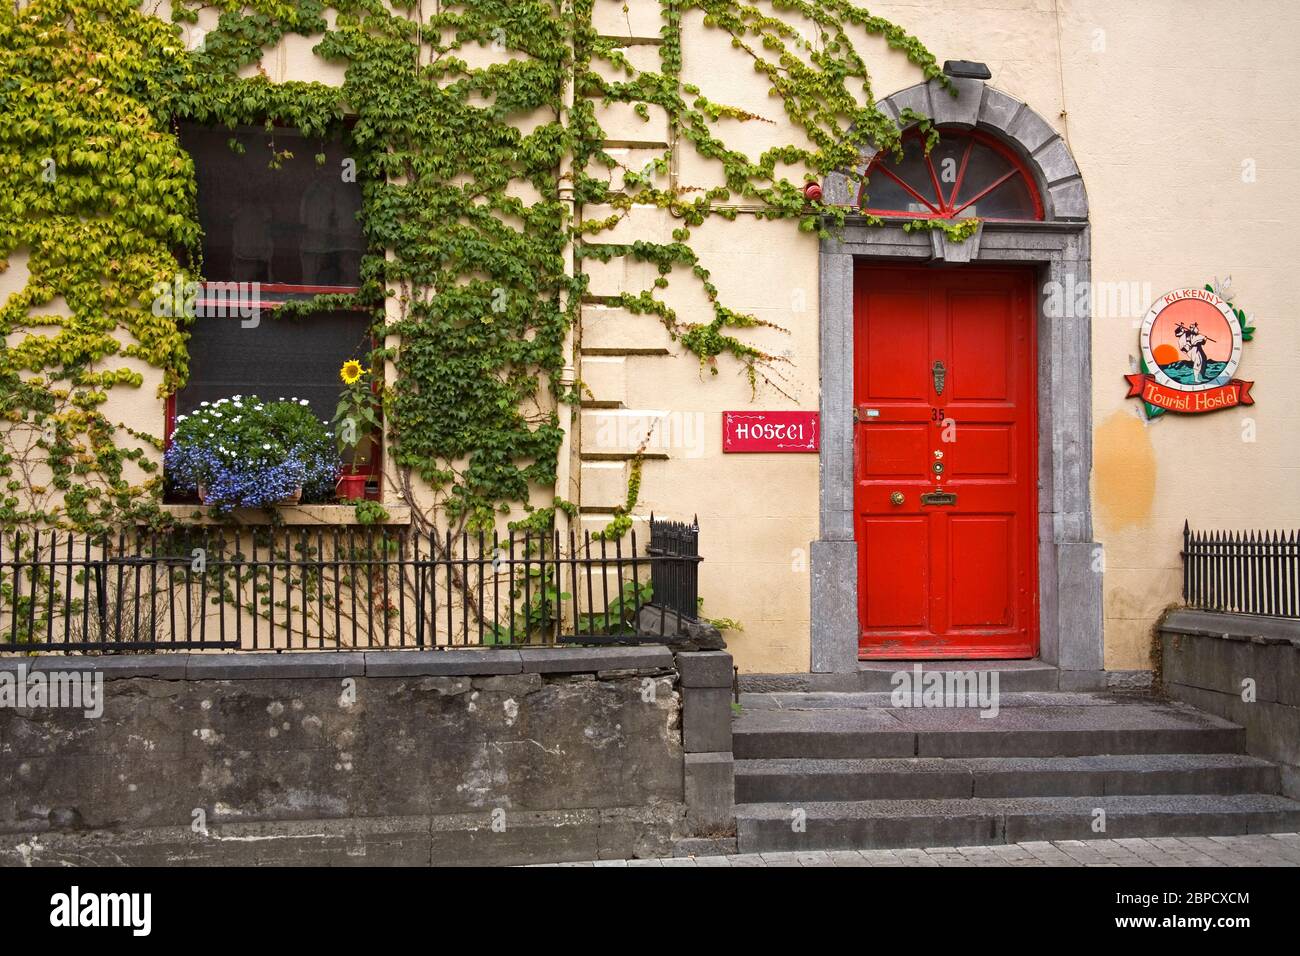 Hostel on Parliament Street, Kilkenny City, County Kilkenny, Ireland Stock Photo